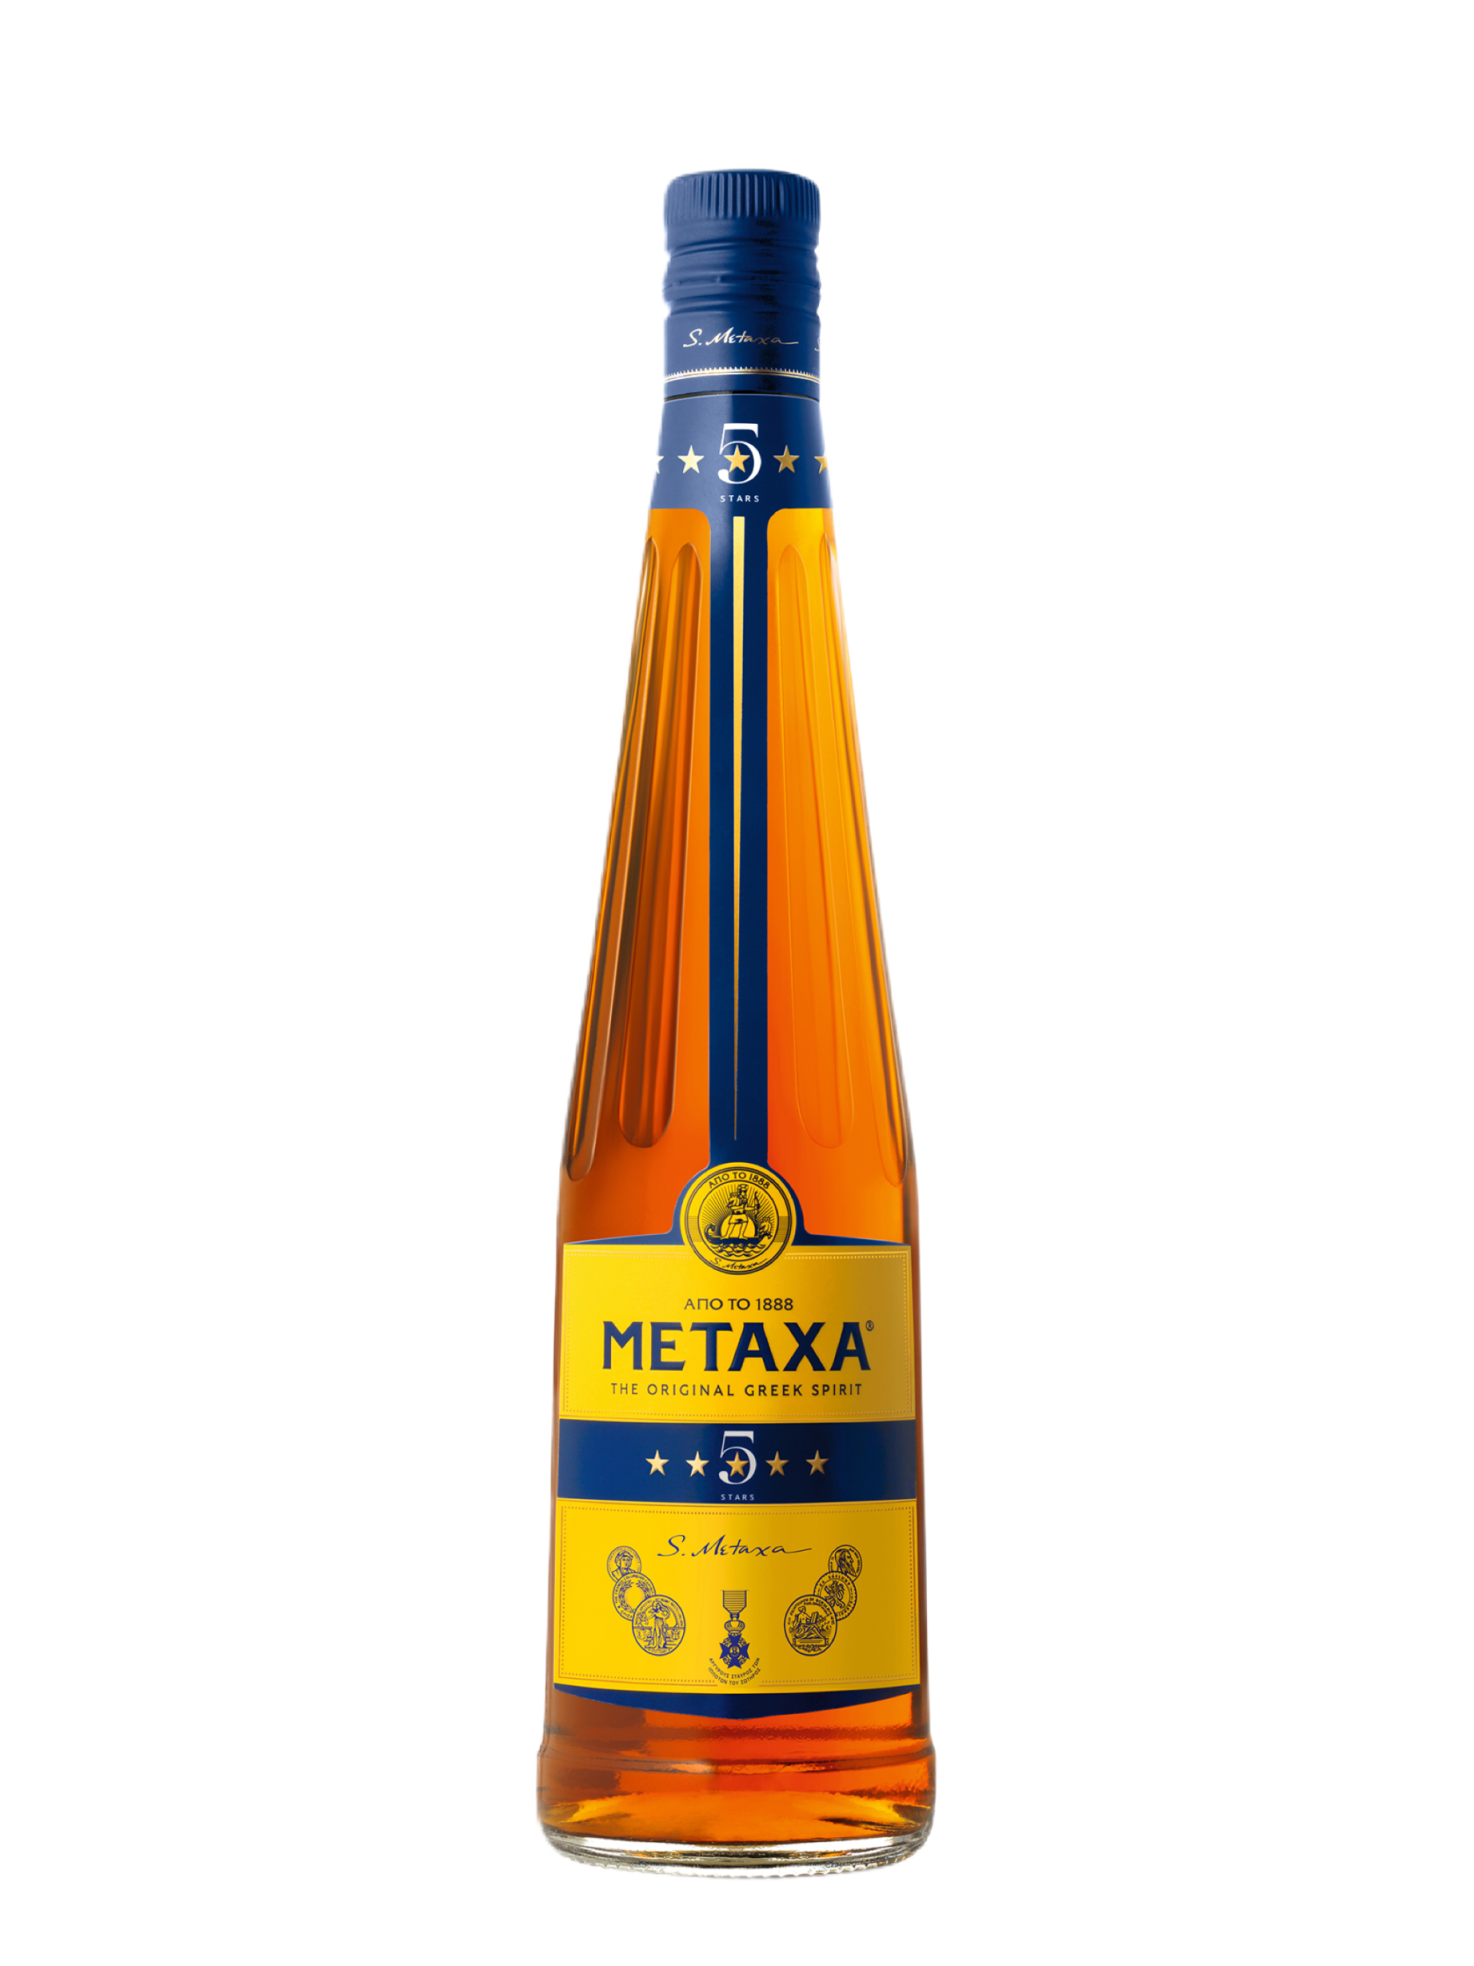 Спиртной напиток Метакса 5* 38% 0,5л (Греция)